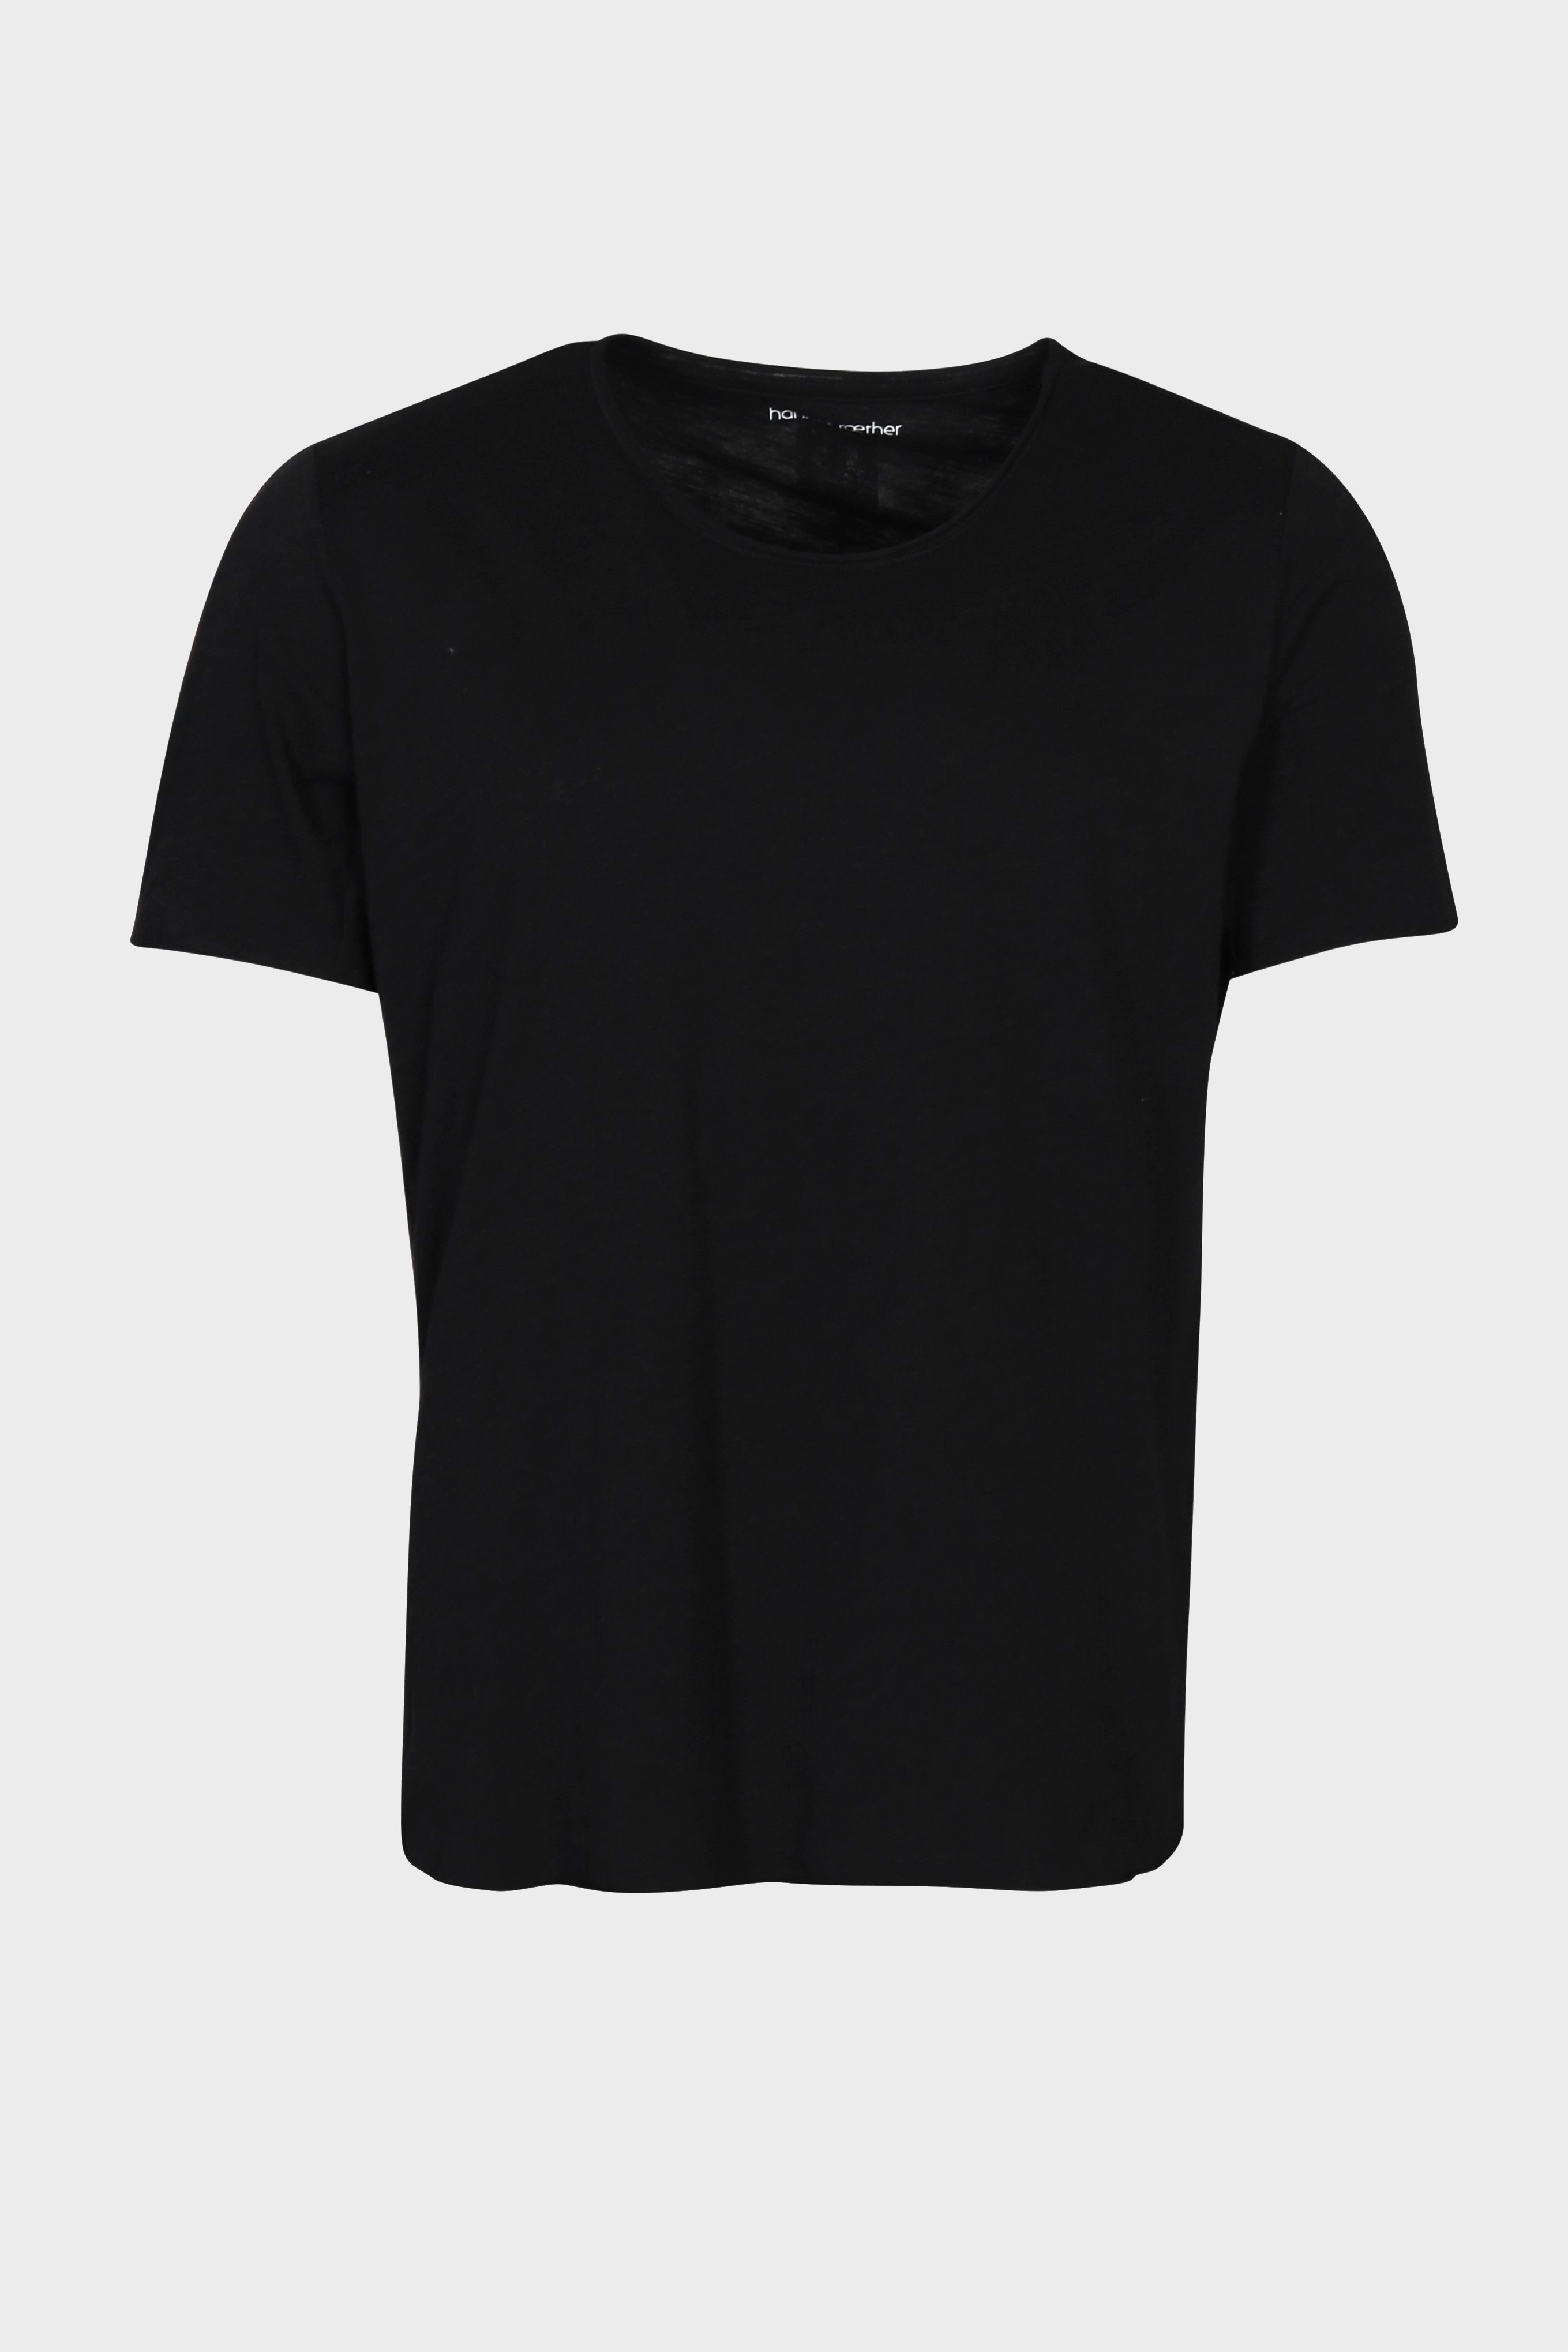 HANNES ROETHER Slub Yersey T-Shirt in Black S